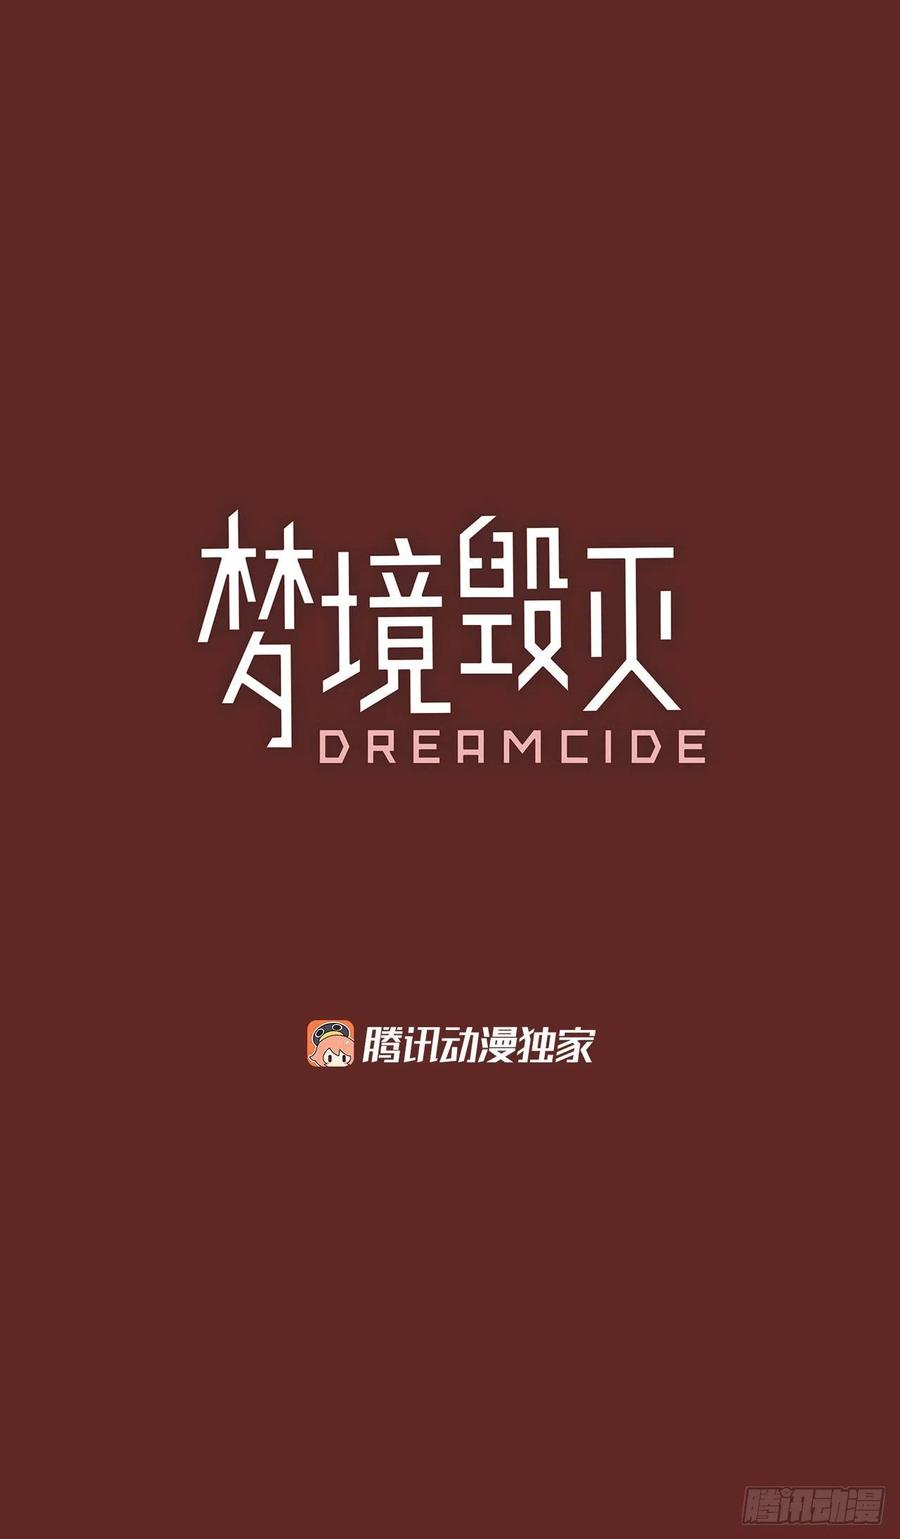 夢境毀滅Dreamcide - 83.人心最可怕（1）(1/2) - 2